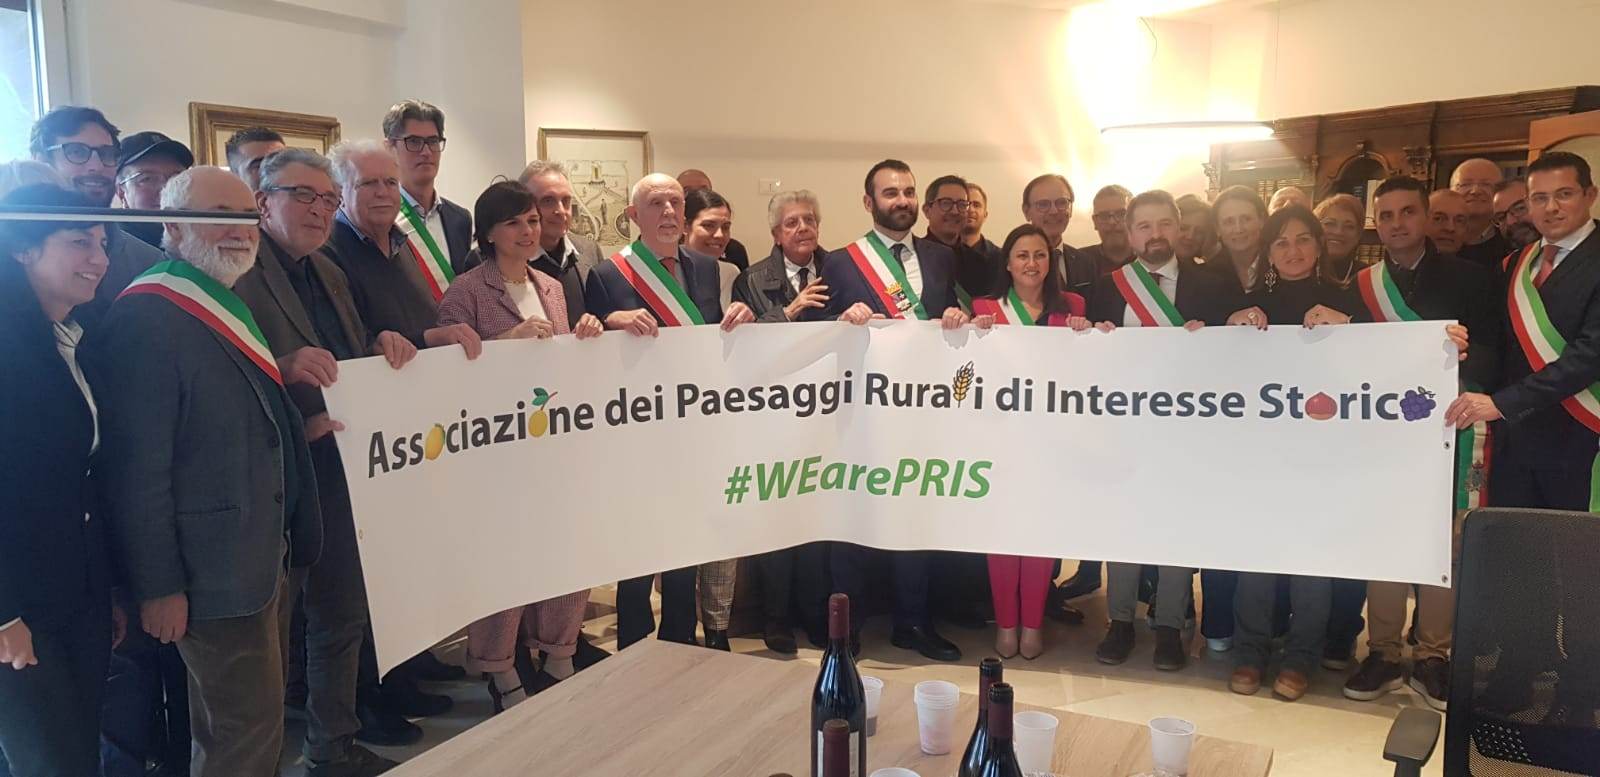 Amalfi: convegno “L’Italia dei Paesaggi Rurali Storici tra Arte, Cultura ed Identità”